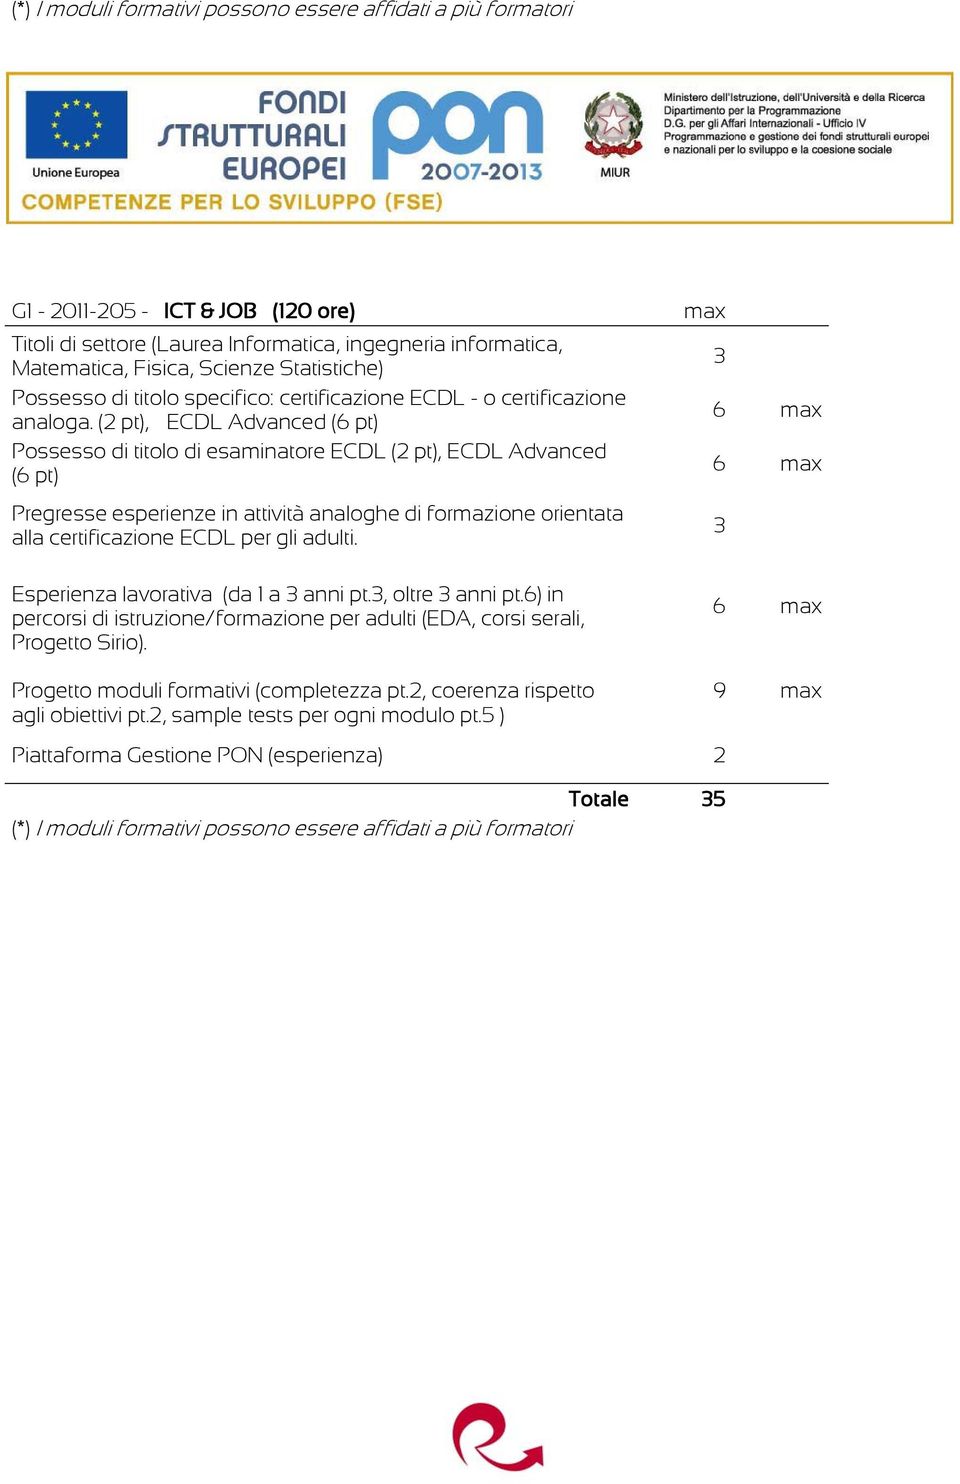 (2 pt), ECDL Advanced (6 pt) Pssess di titl di esaminatre ECDL (2 pt), ECDL Advanced (6 pt) Pregresse esperienze in attività analghe di frmazine rientata alla certificazine ECDL per gli adulti.